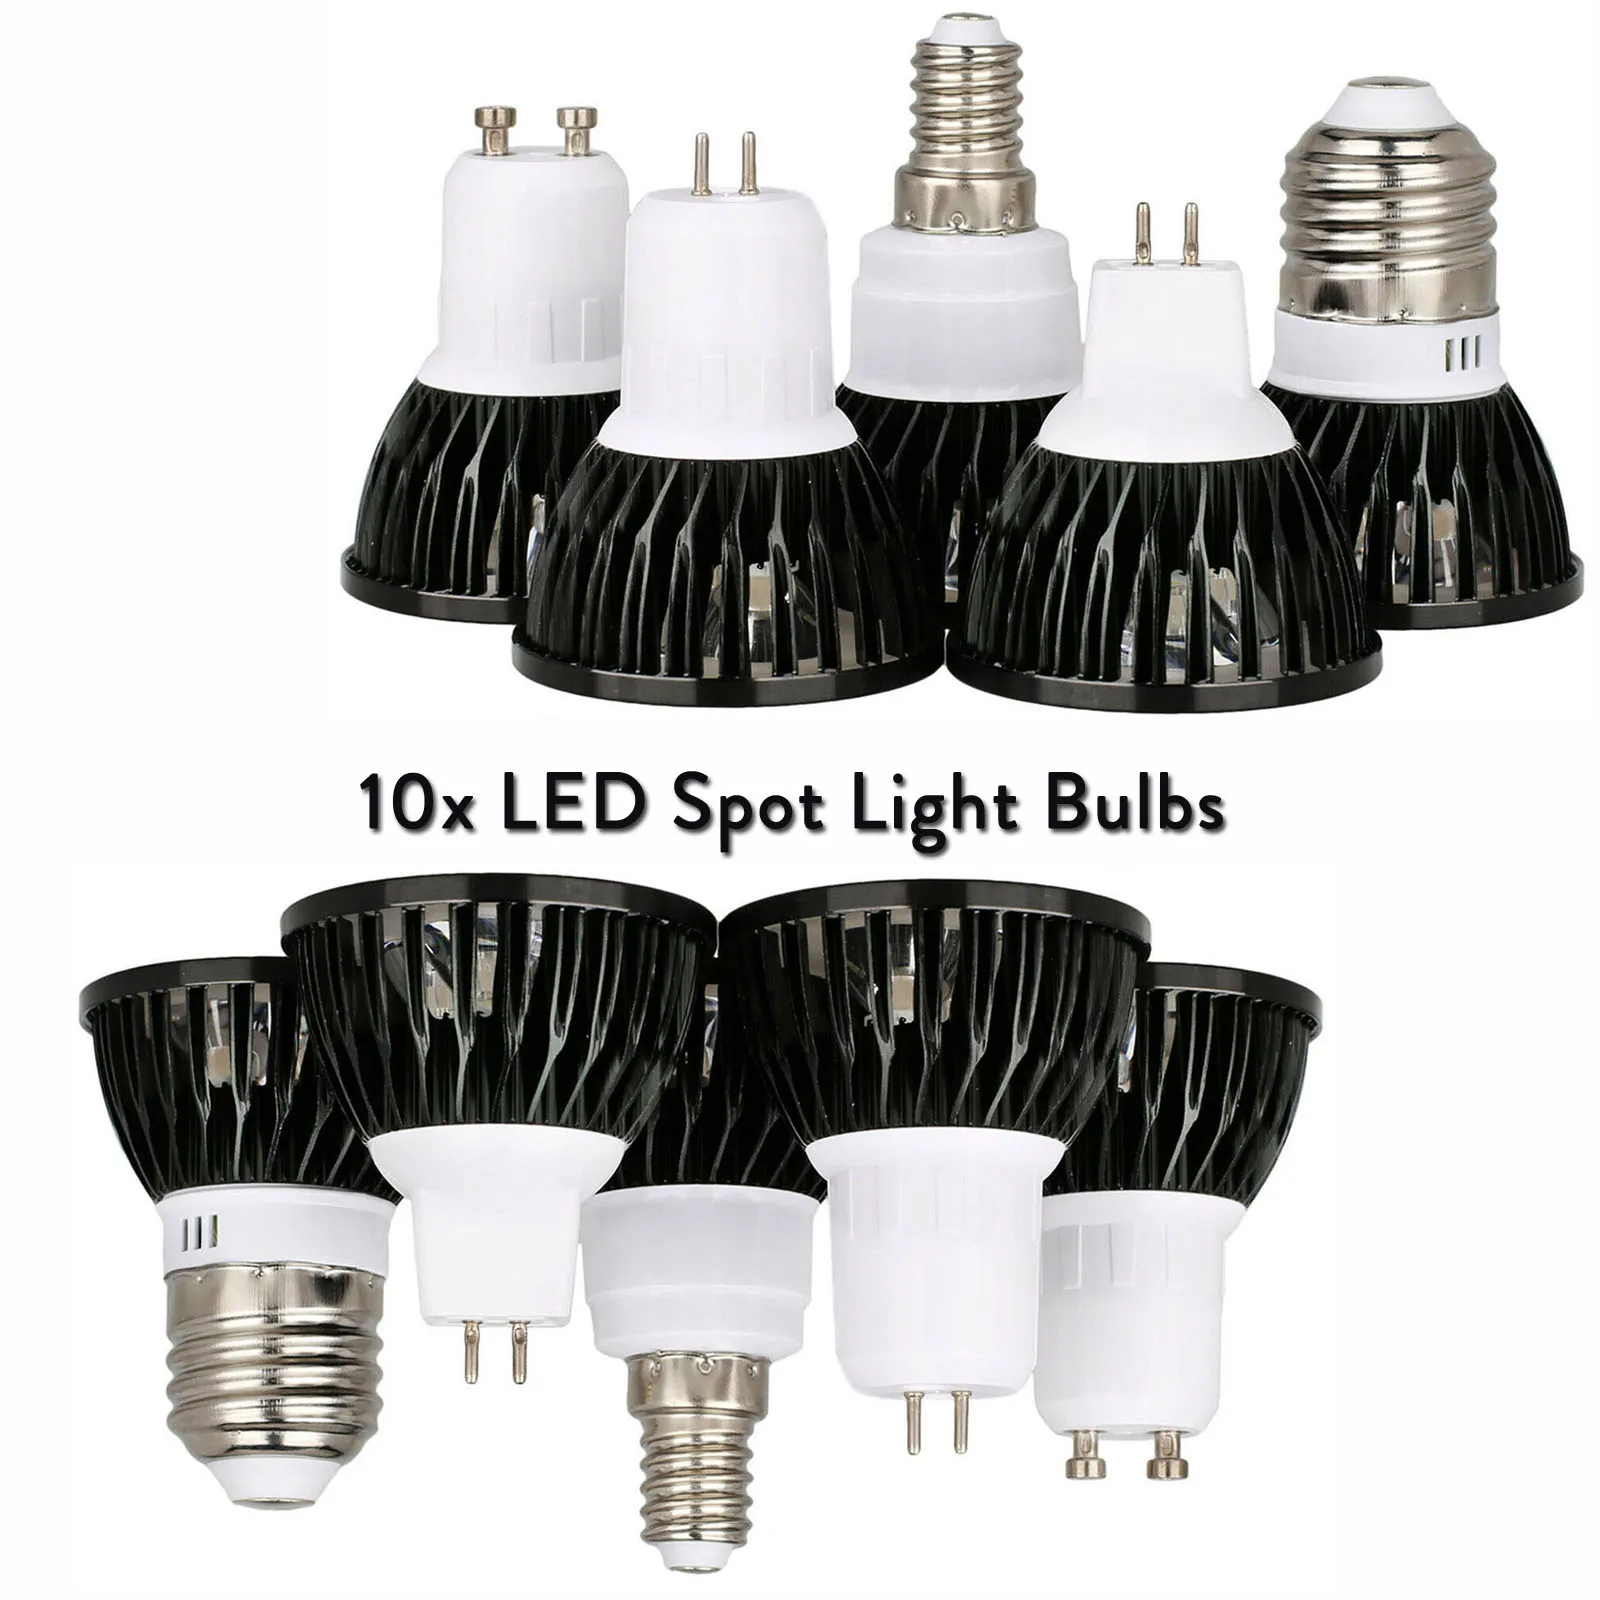 

10x Led Spotlight Dimmable LED Lampada 9W 12W 15W GU10 MR16 GU5.3 E27 E14 LED Bulb 110V 220V 12V Warm Neutral Cold White Lamps